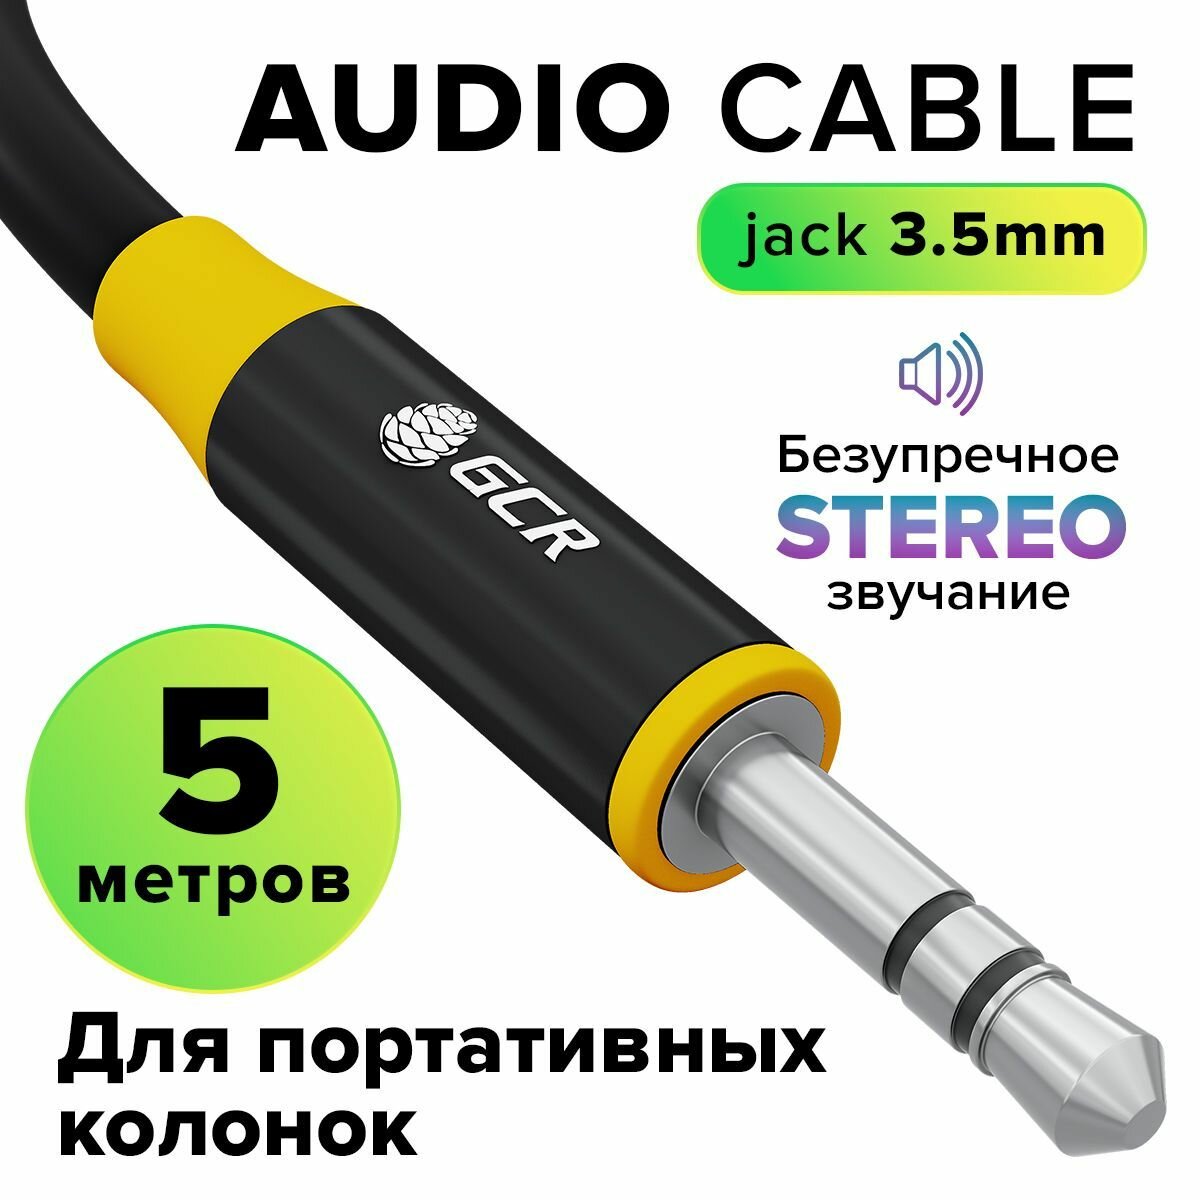 Кабель AUX 5 метров GCR Jack 3.5 mm аудио провод в машину 3.5 мм stereo черно-желтый шнур aux для колонок наушников JBL Sony SVEN AKG Sennheiser